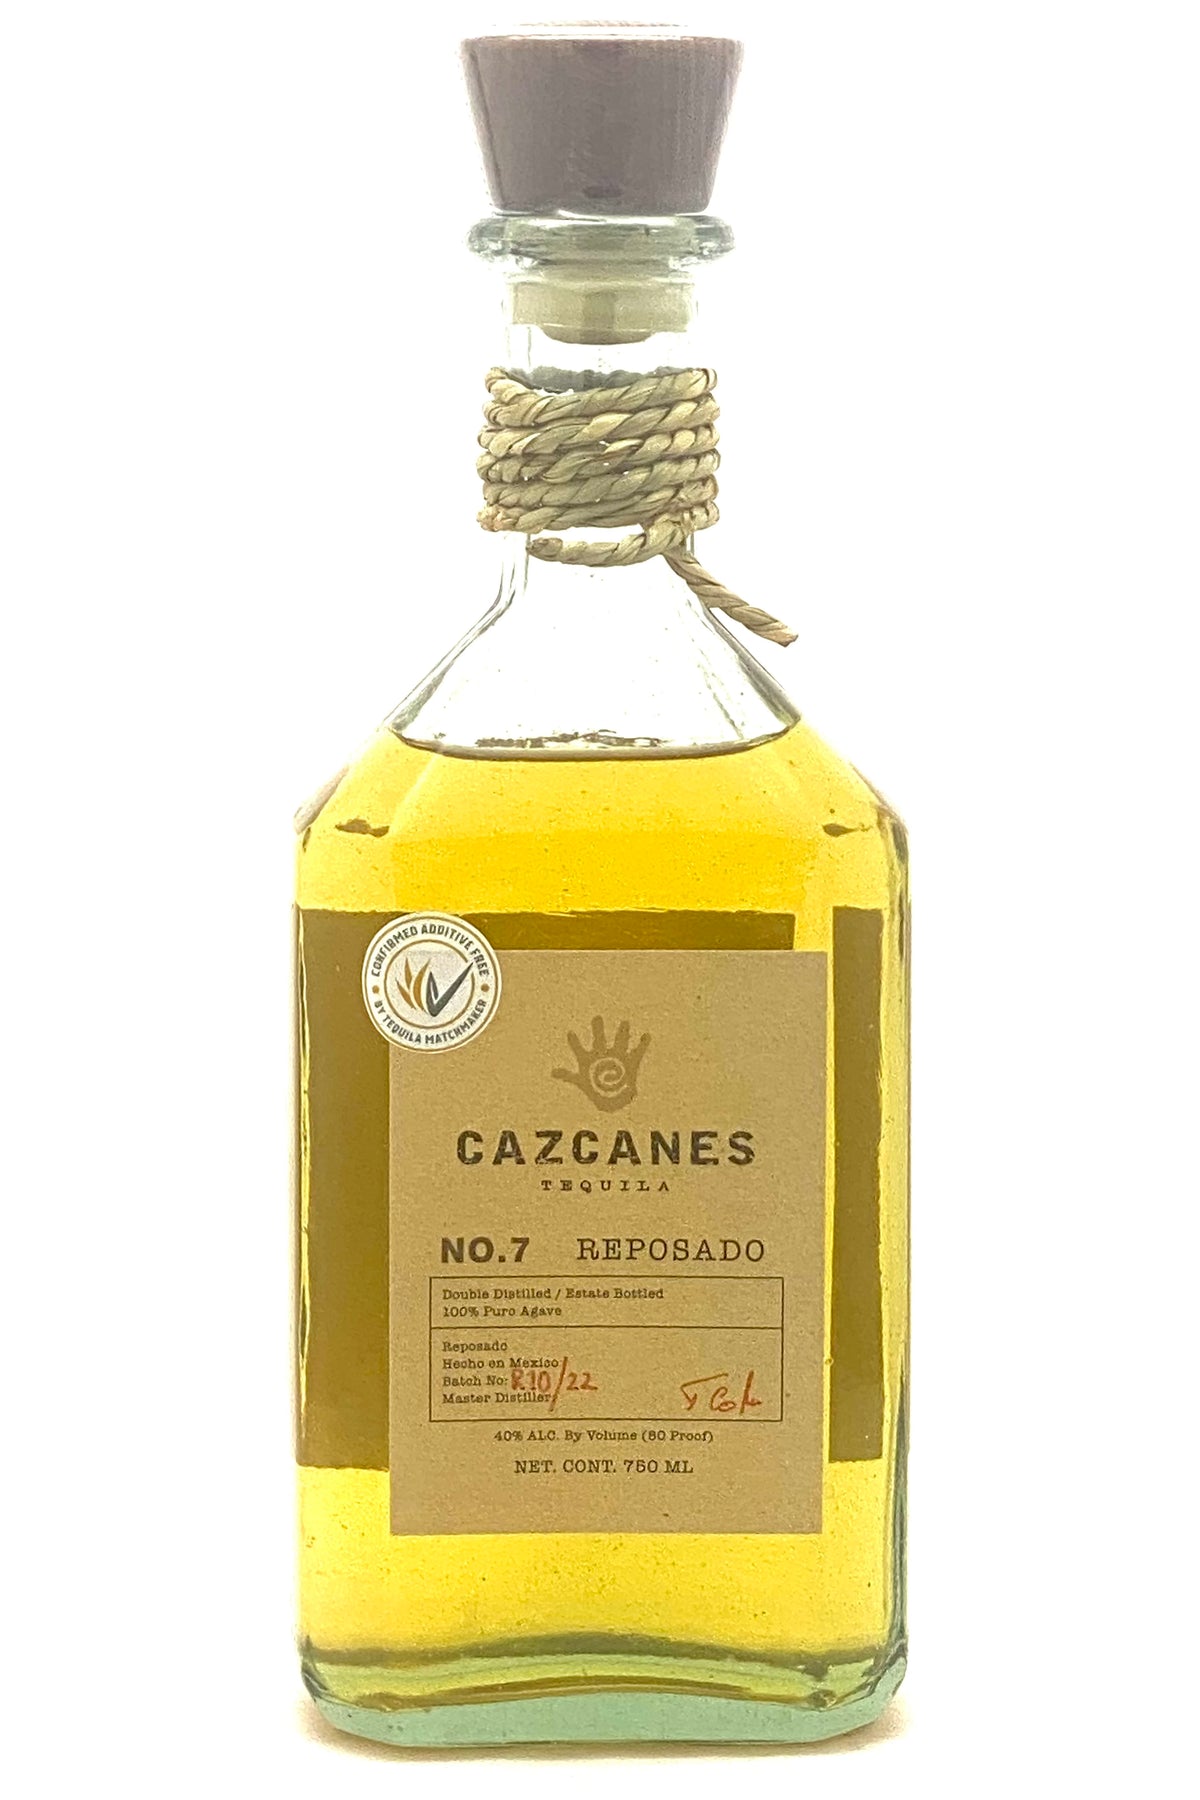 Cazcanes Tequila Reposado No. 7